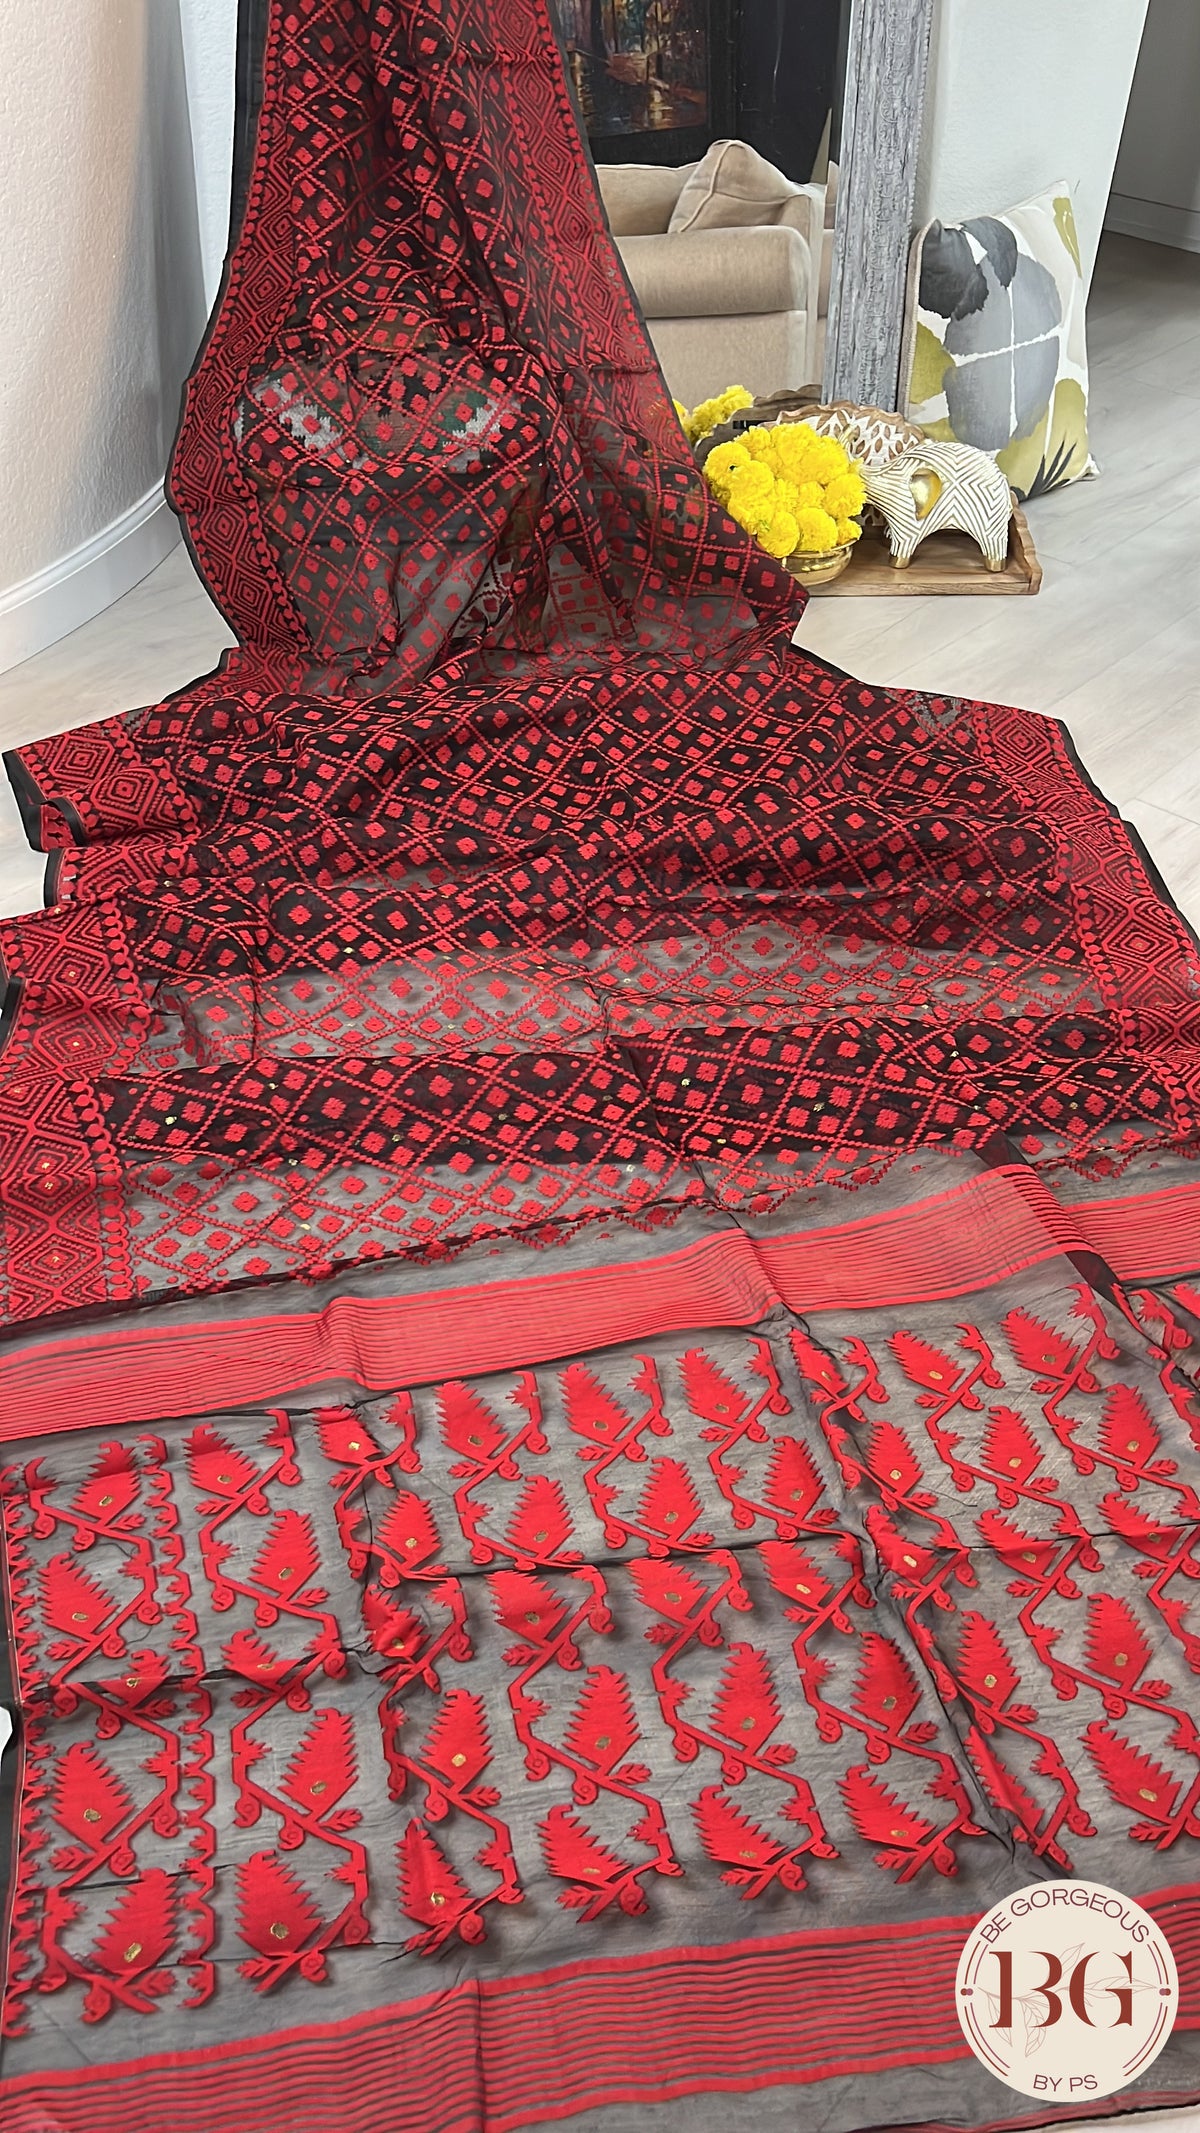 Cotton Jamdani saree color - black red